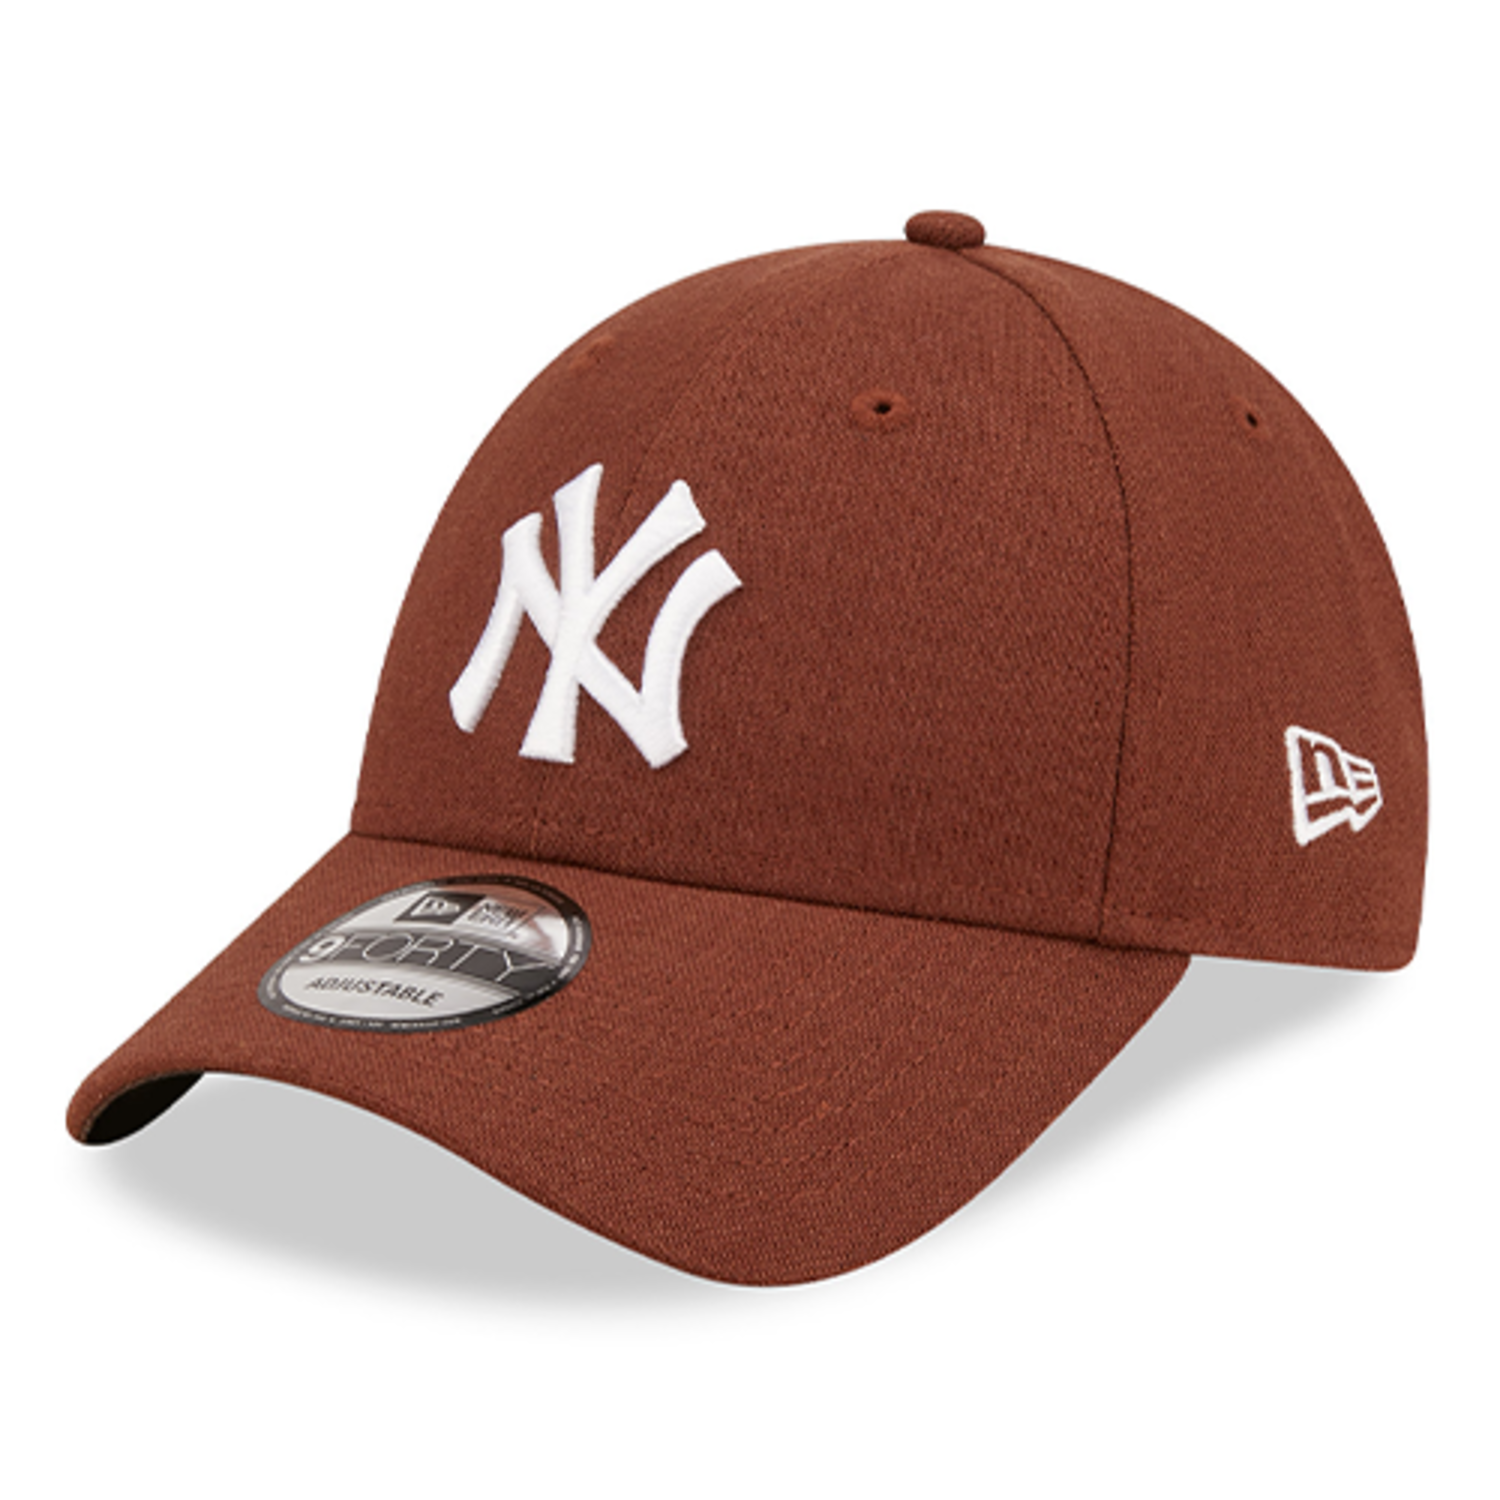 Will New Era Make a NY Yankee Hat With No Brim?